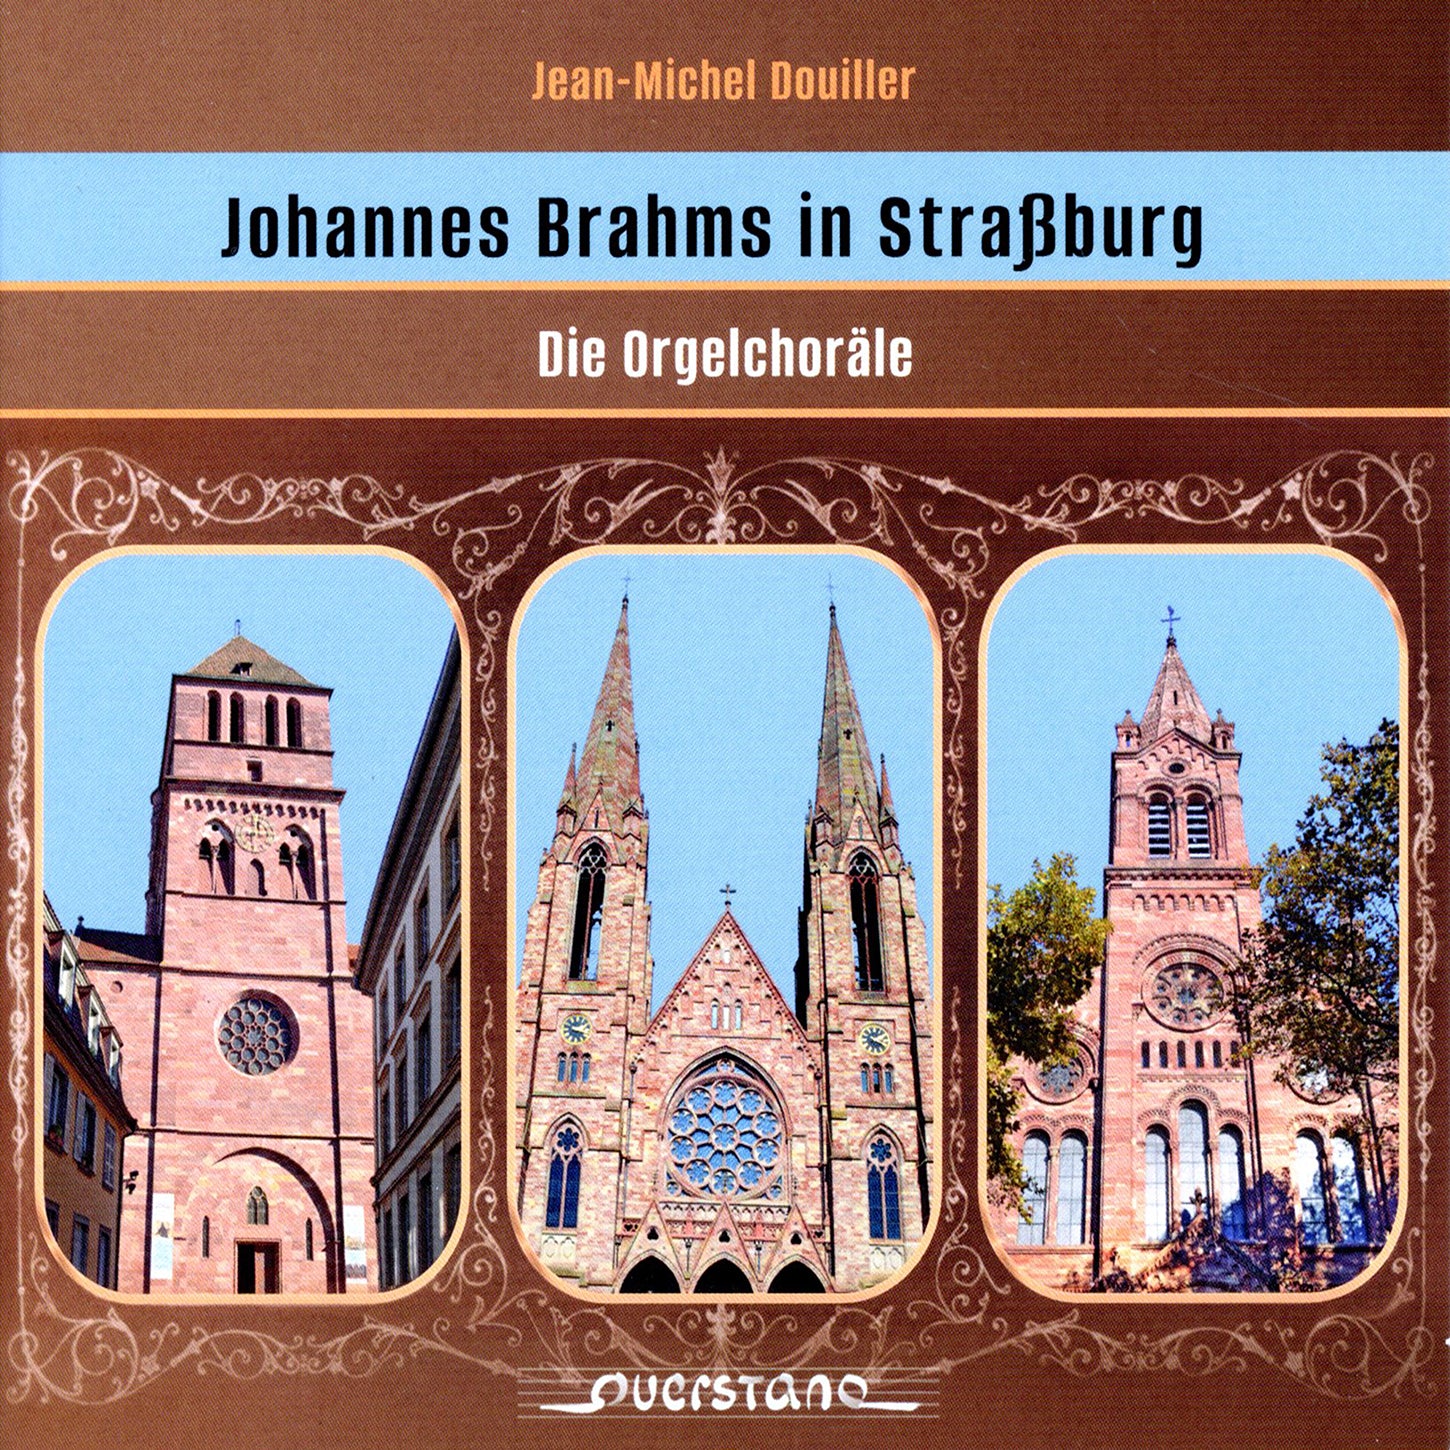 Brahms in Strassbourg - The organ chorales